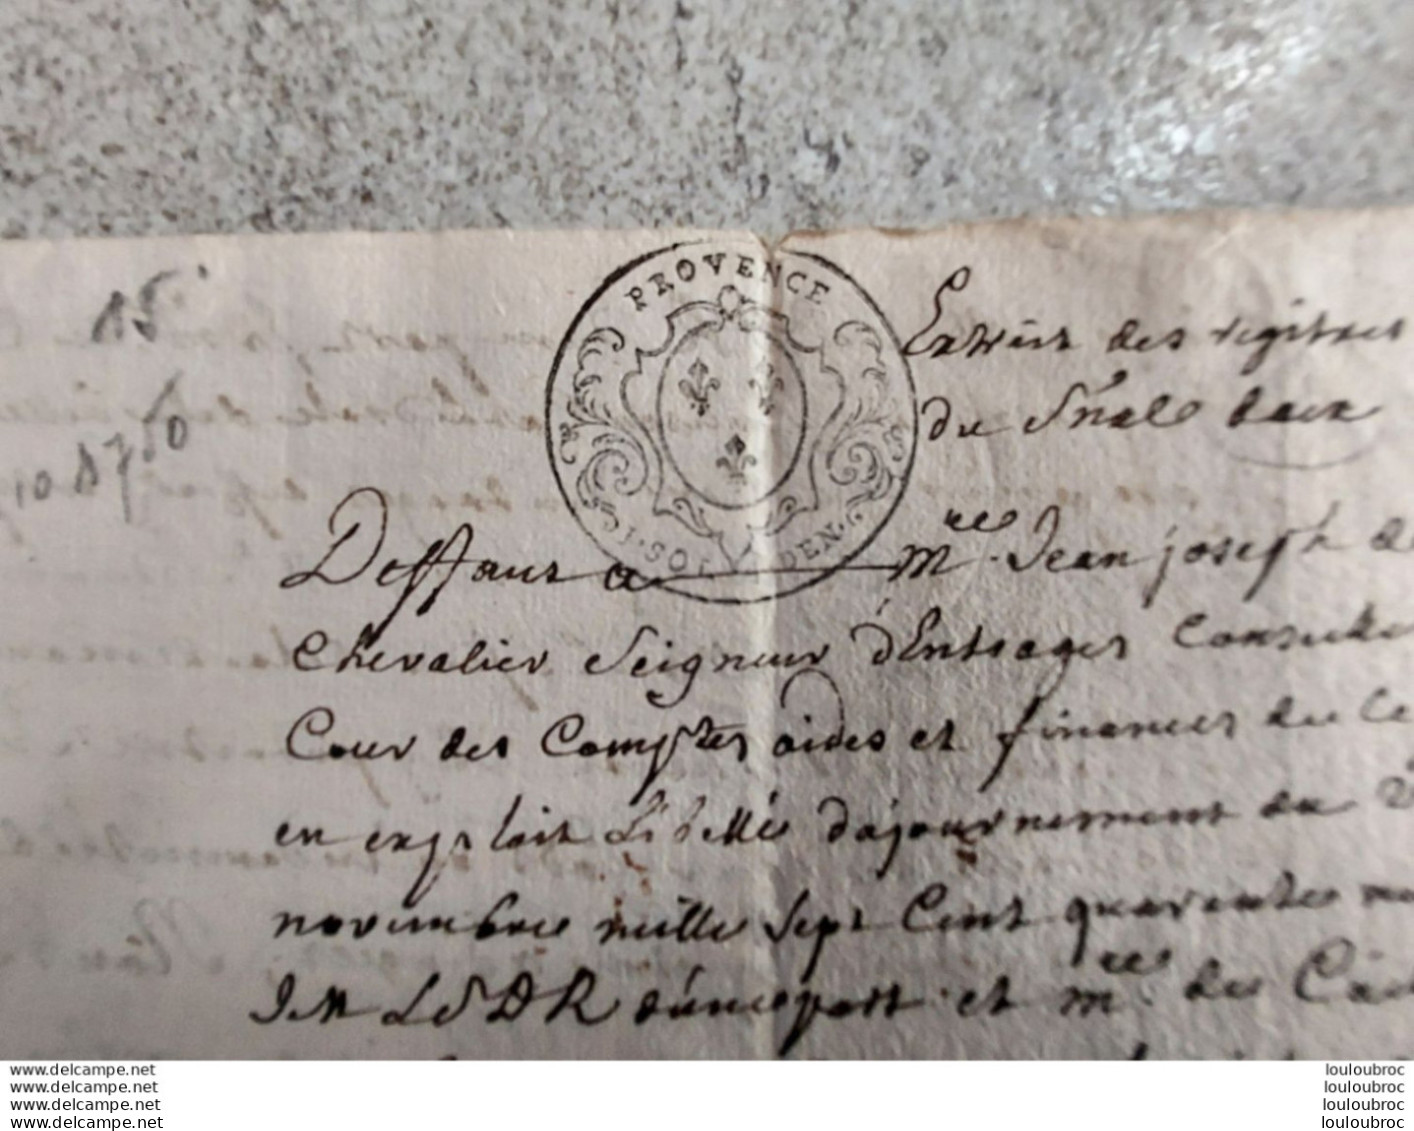 GENERALITE PROVENCE 1750 - Seals Of Generality